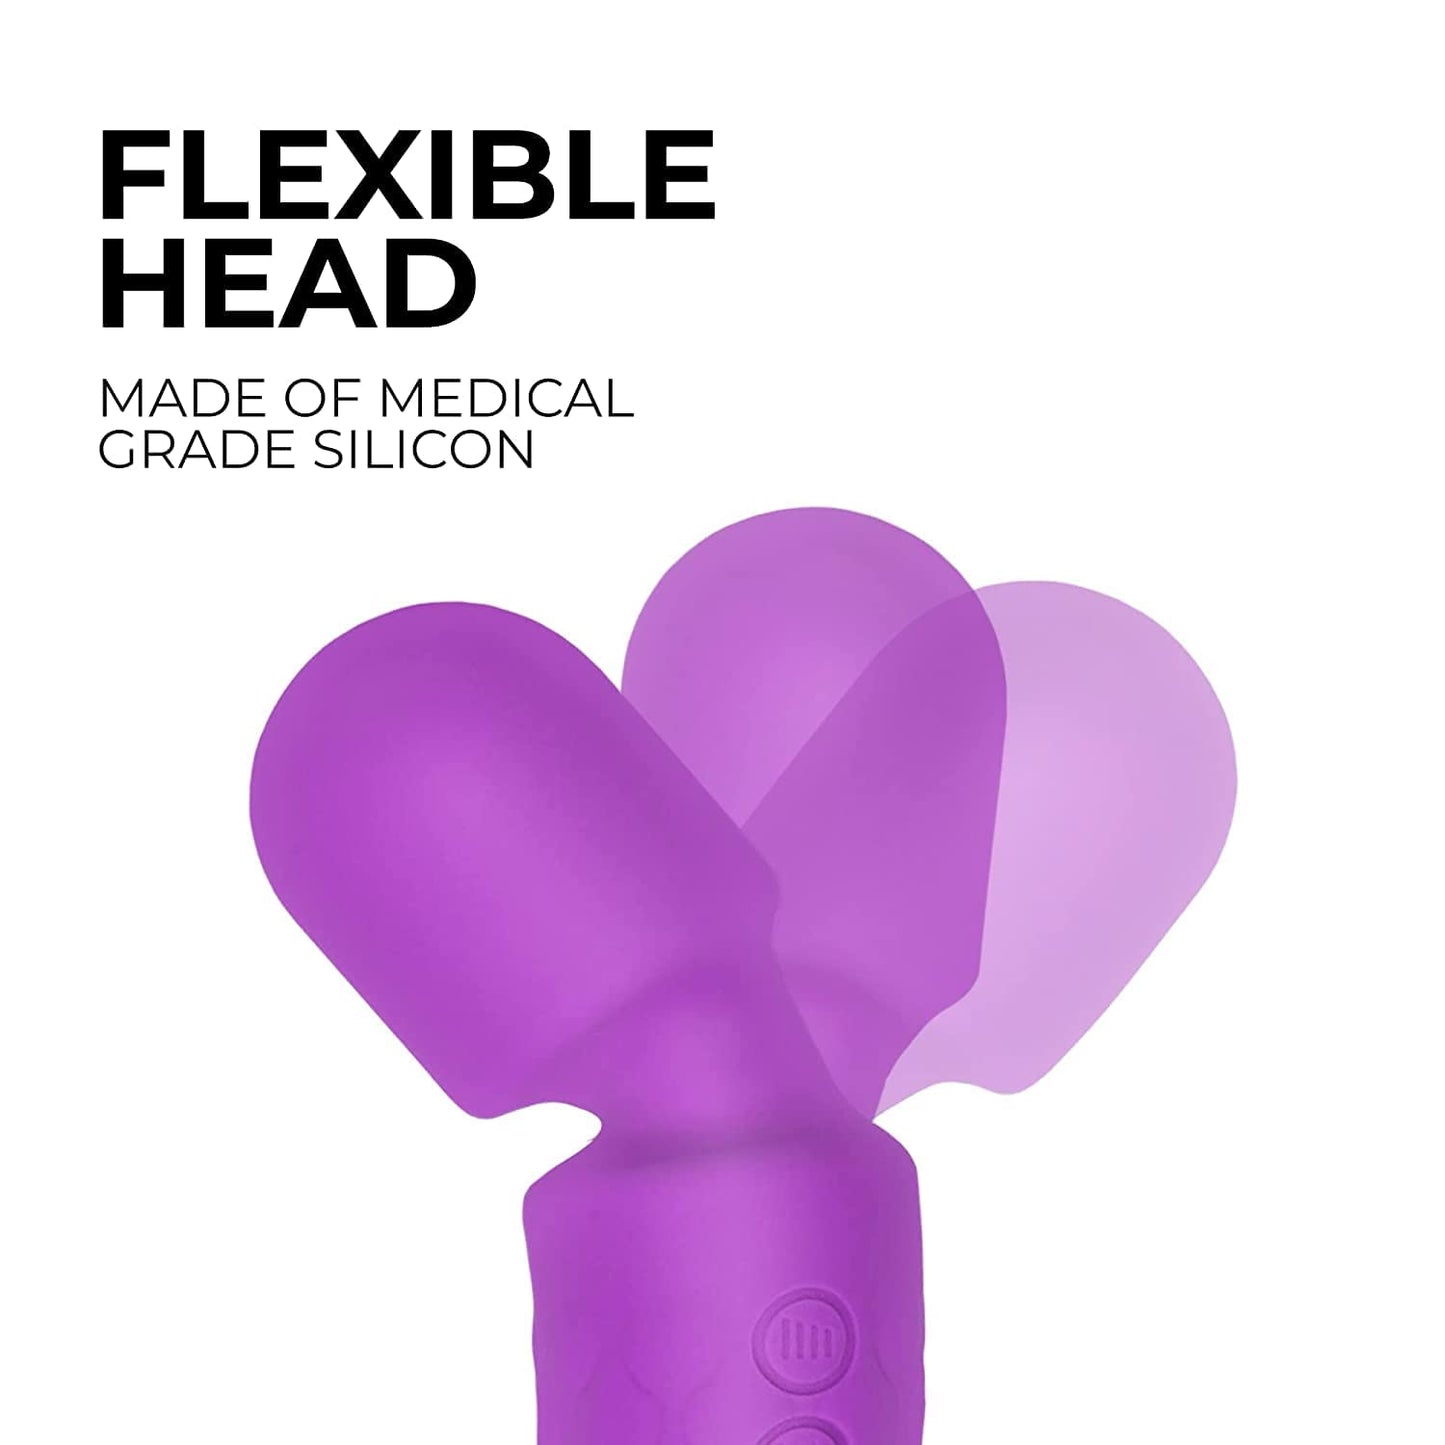 Flexible Head